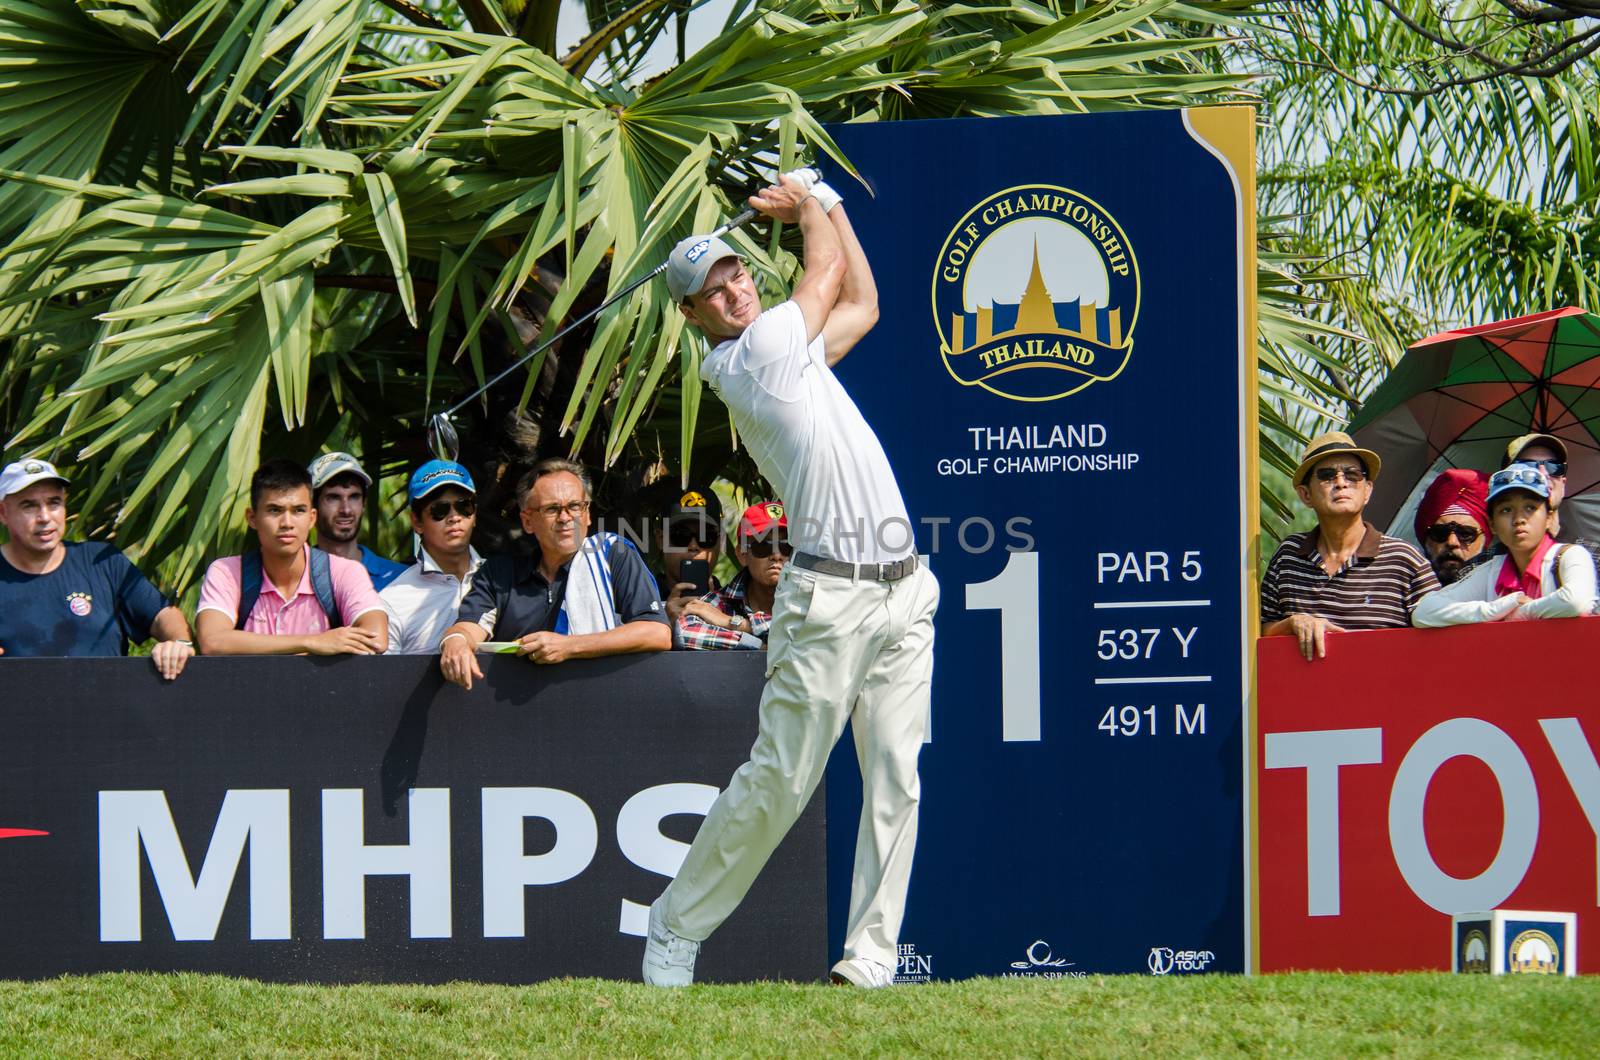 Martin Kaymer in Thailand Golf Championship 2015 by chatchai